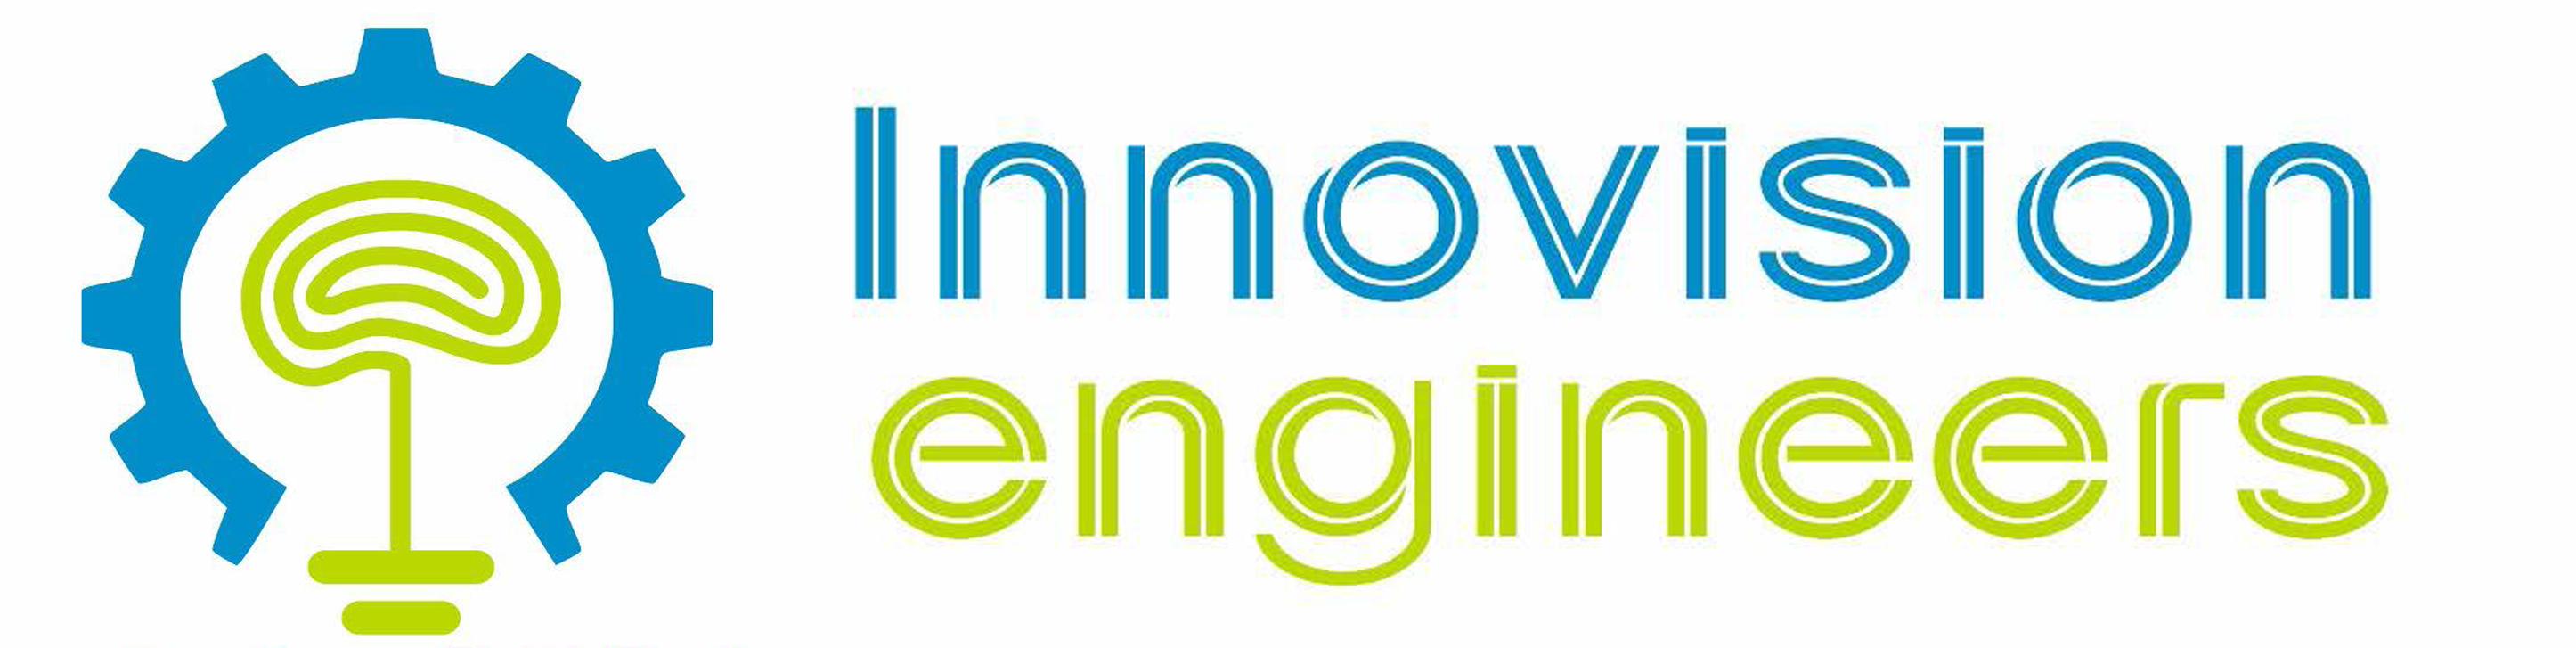 Innovision Engineers :Air compressor manufacturer in Pune, Maharashtra, India